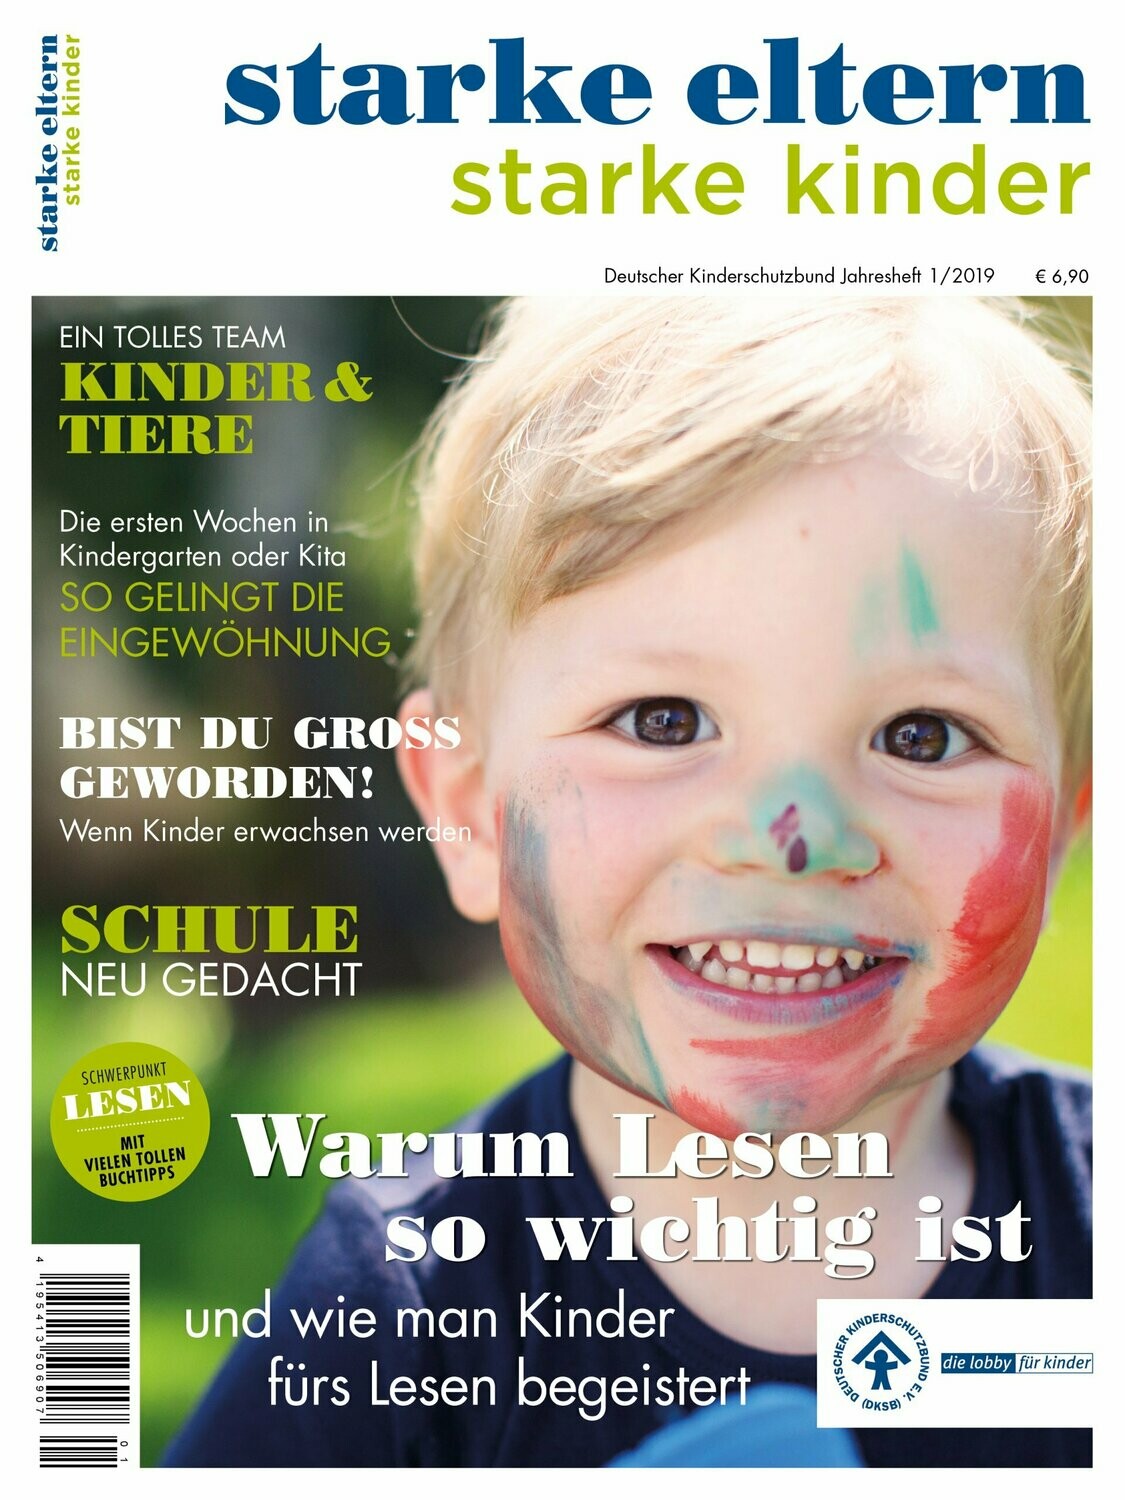 starke eltern - starke kinder 2019 (e-paper)